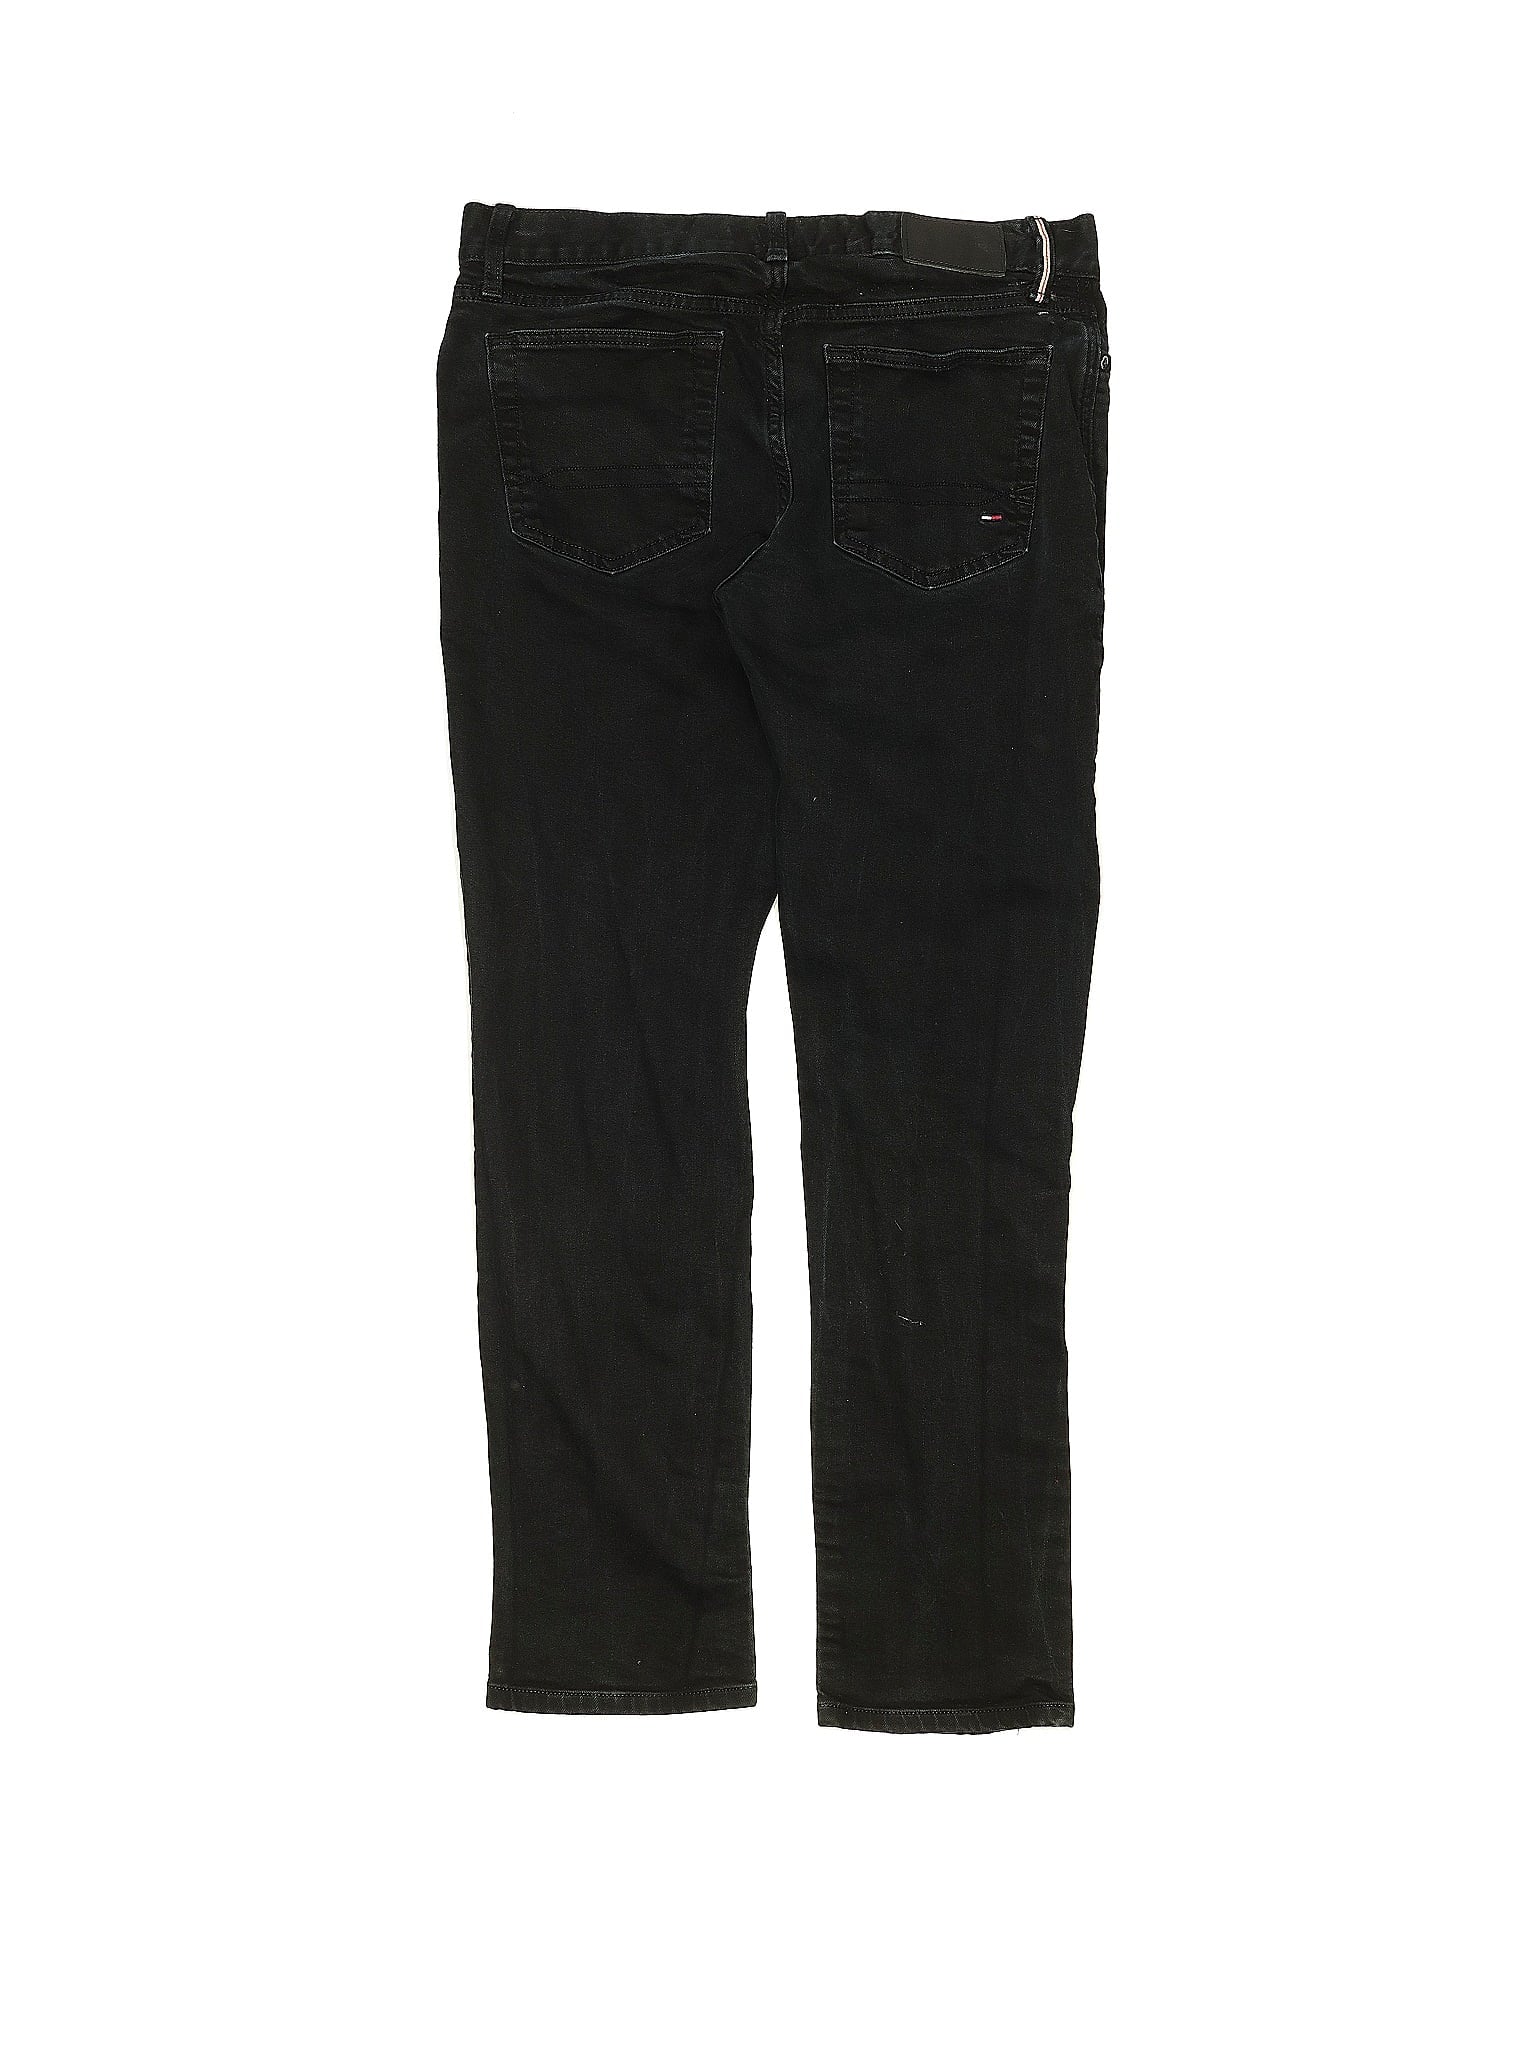 Jeans waist size - 33 ; 32 length